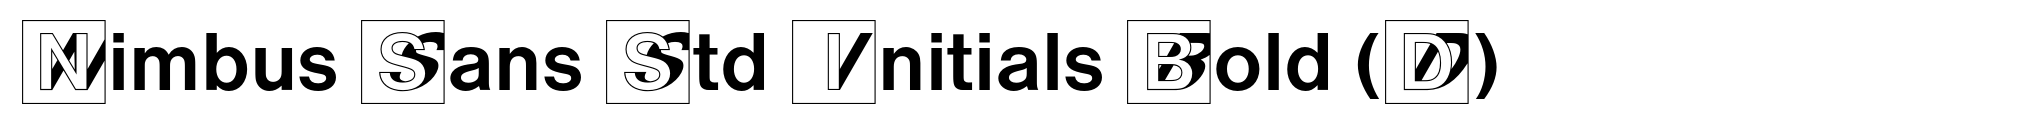 Nimbus Sans Std Initials Bold (D) image